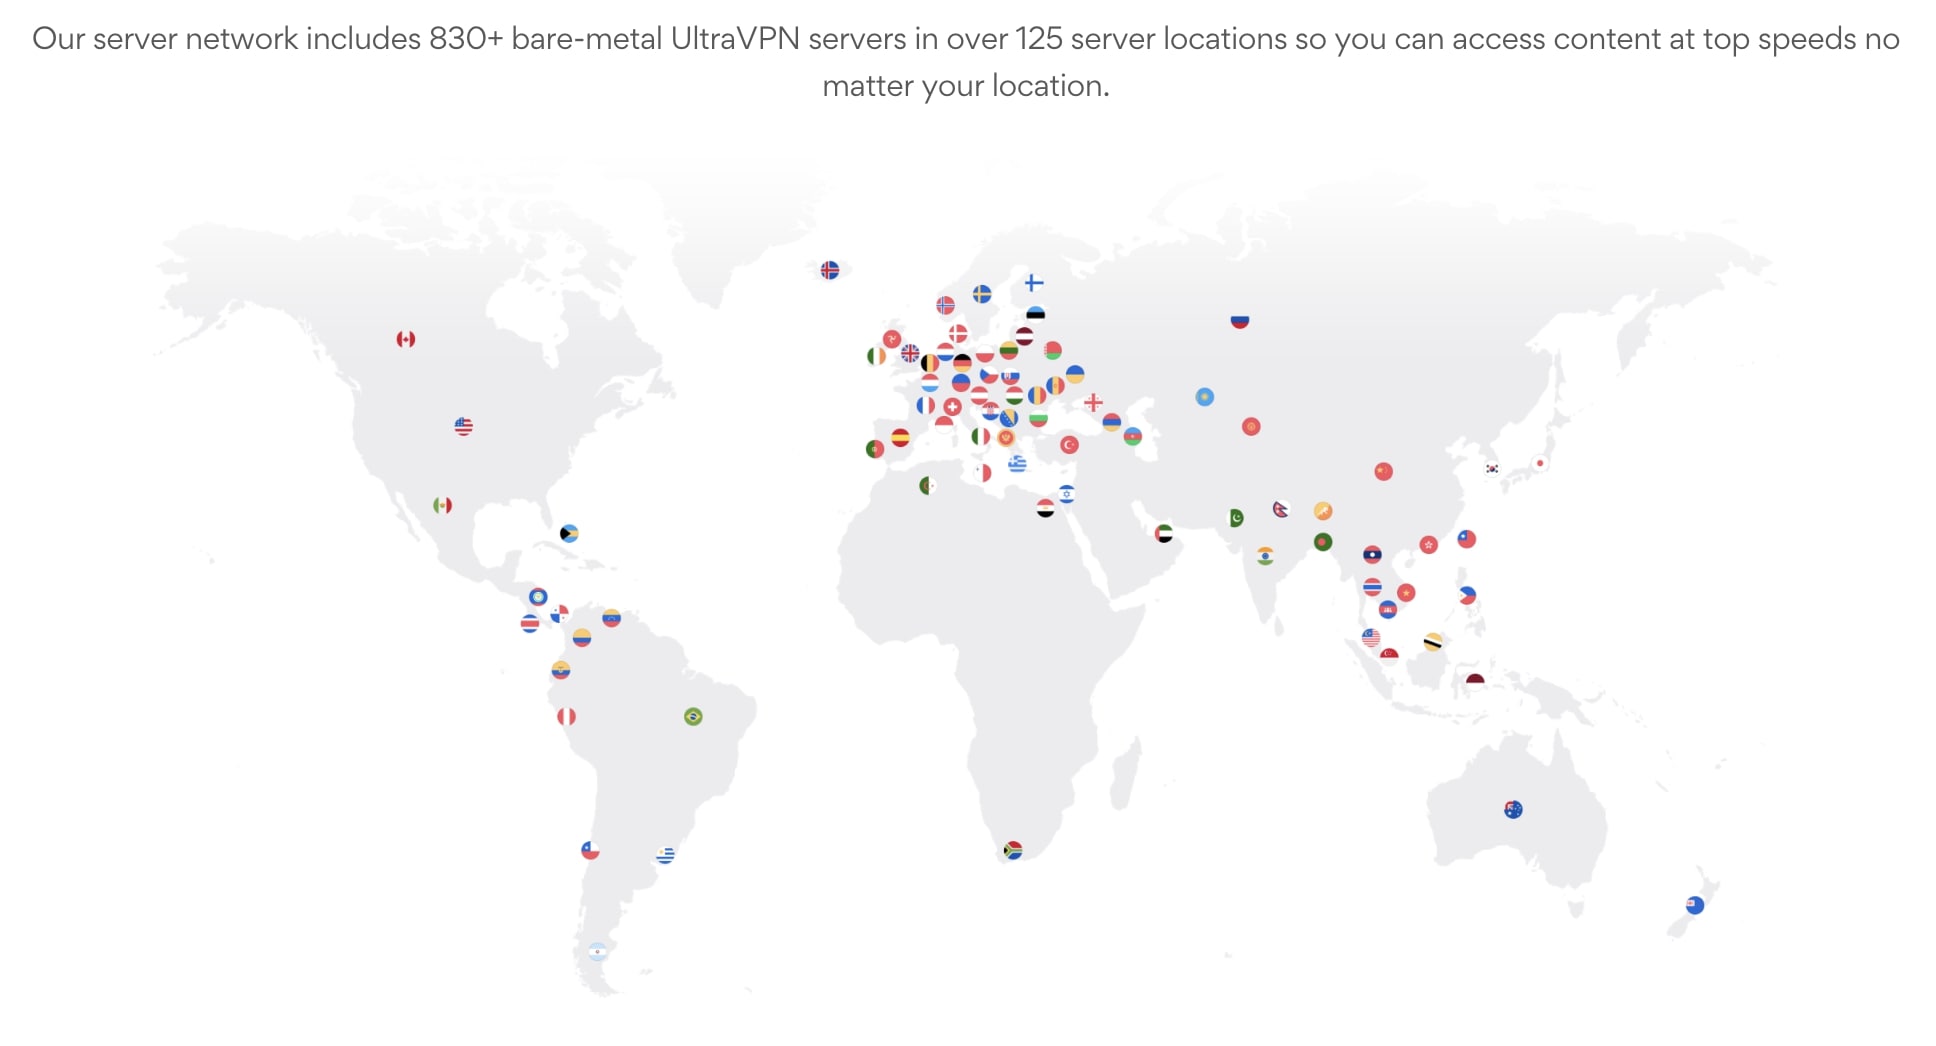 Map of server locations for UltraVPN